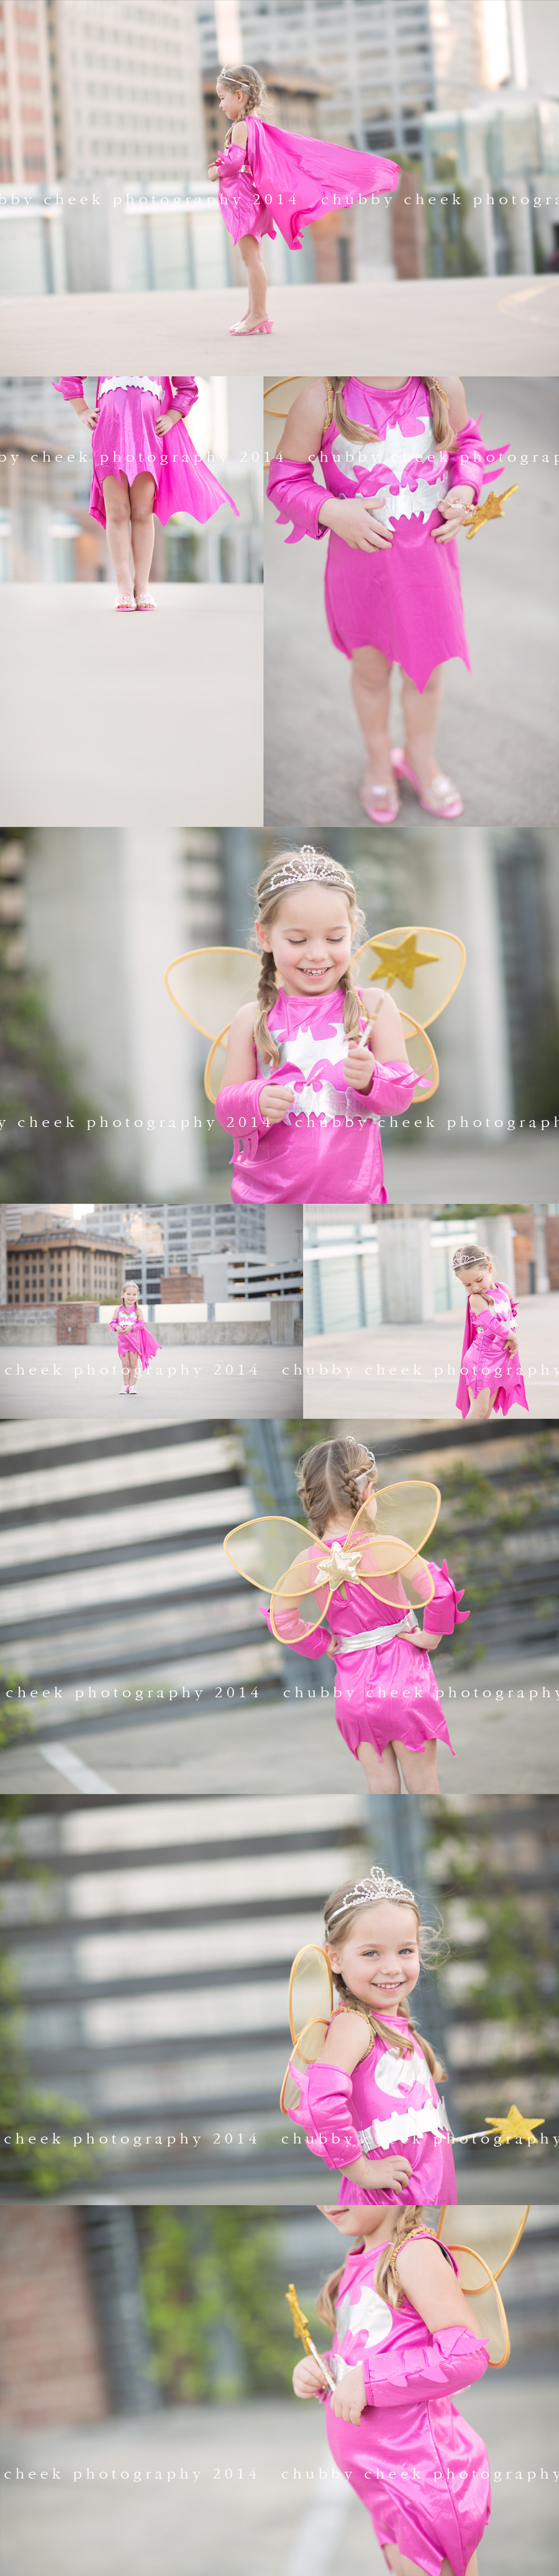 ©chubby cheek photography texas child photographer